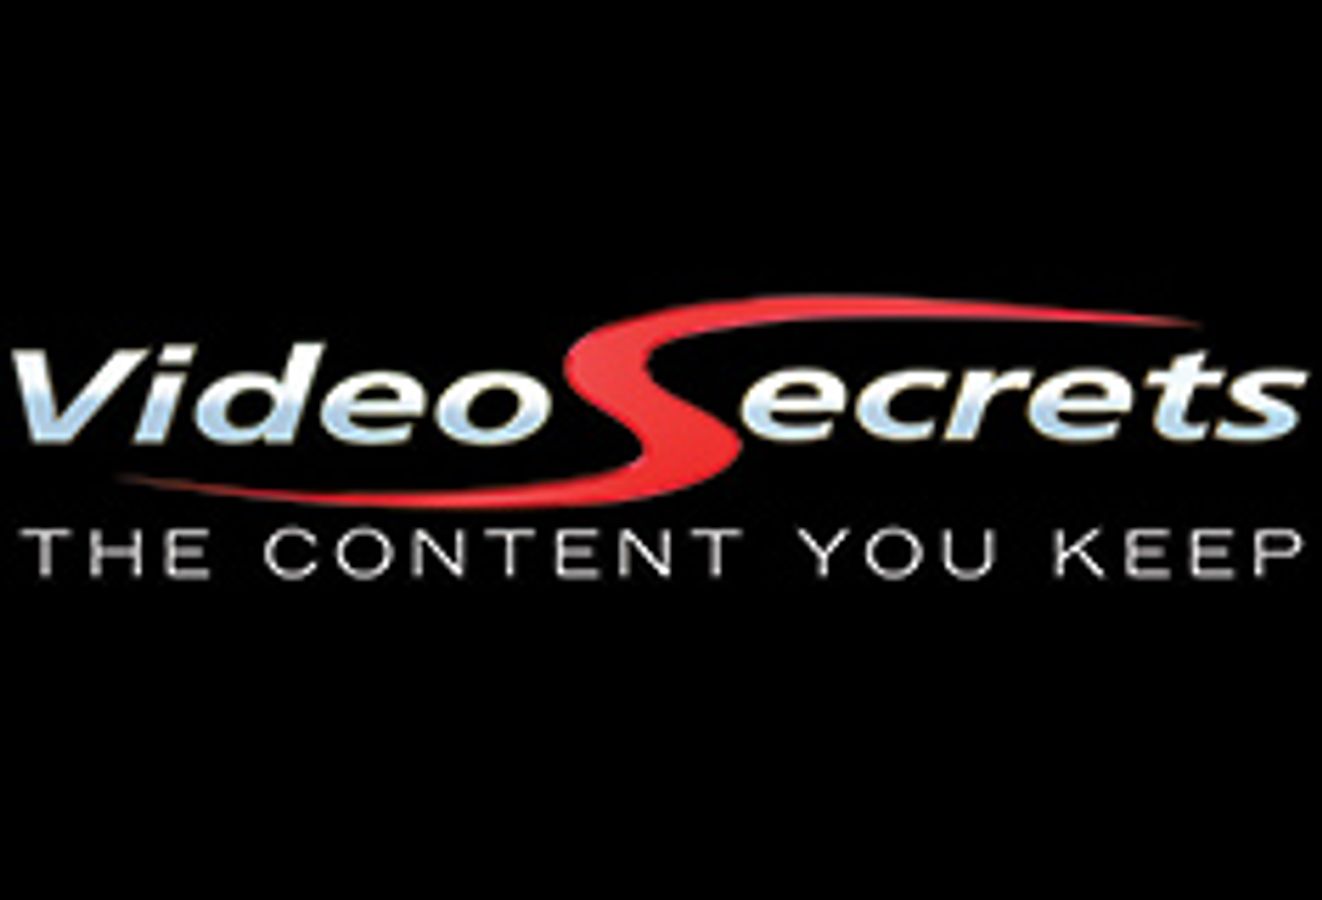 Video Secrets